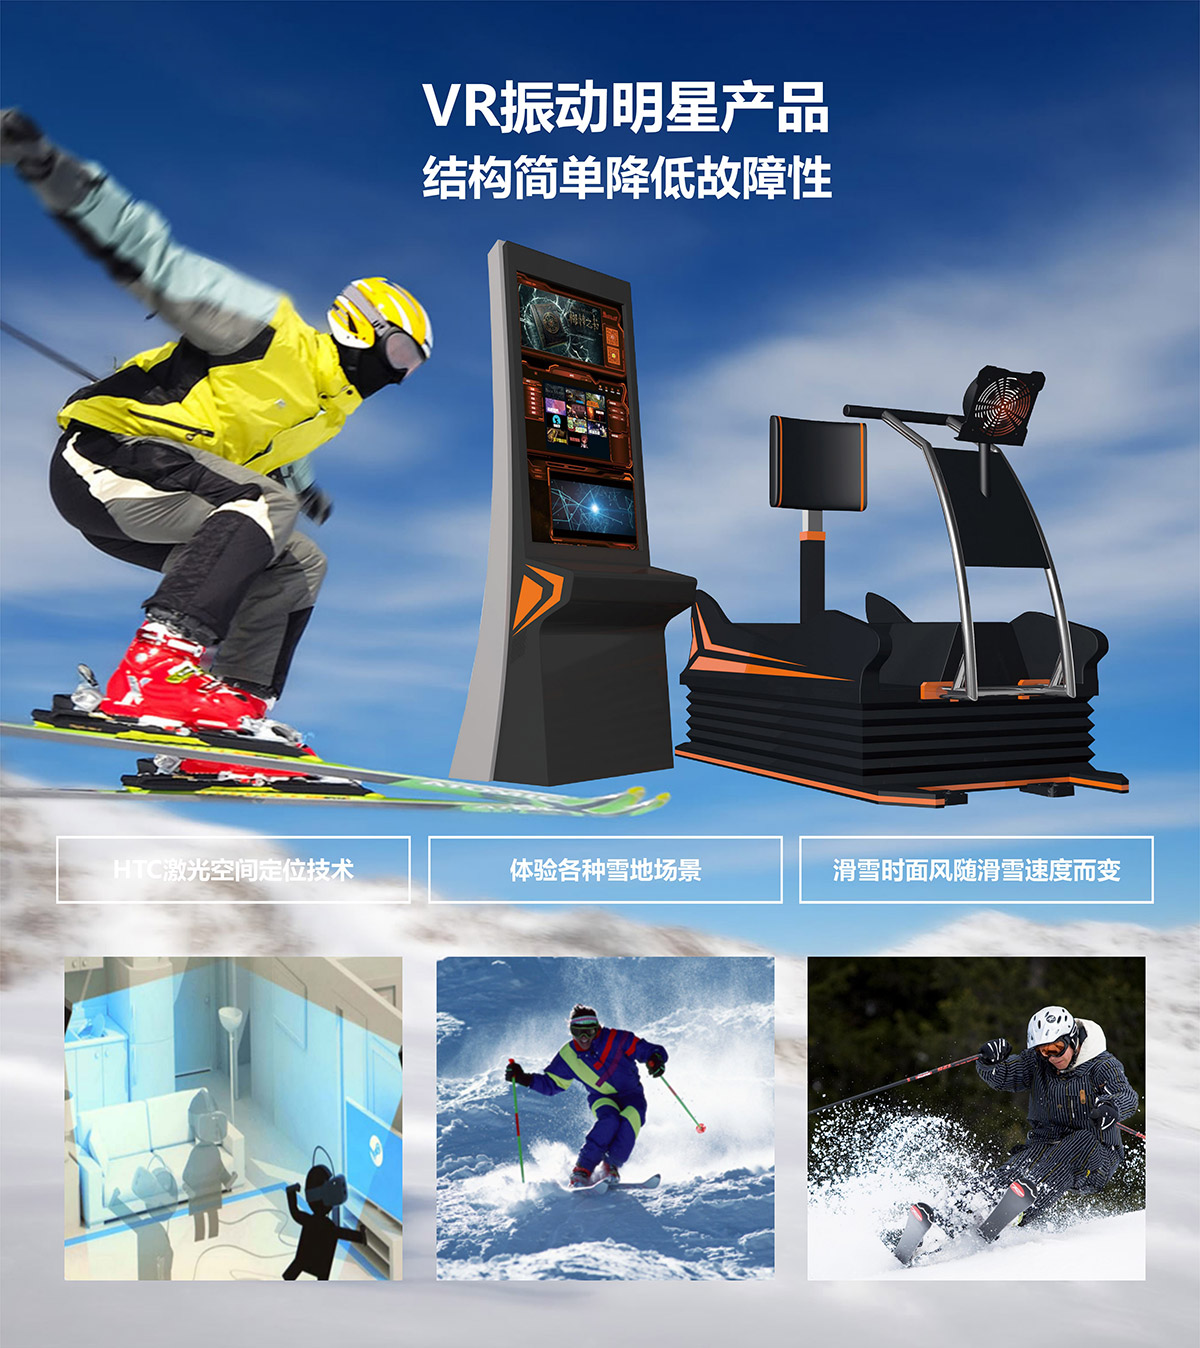 AR戒毒明星产品模拟滑雪.jpg